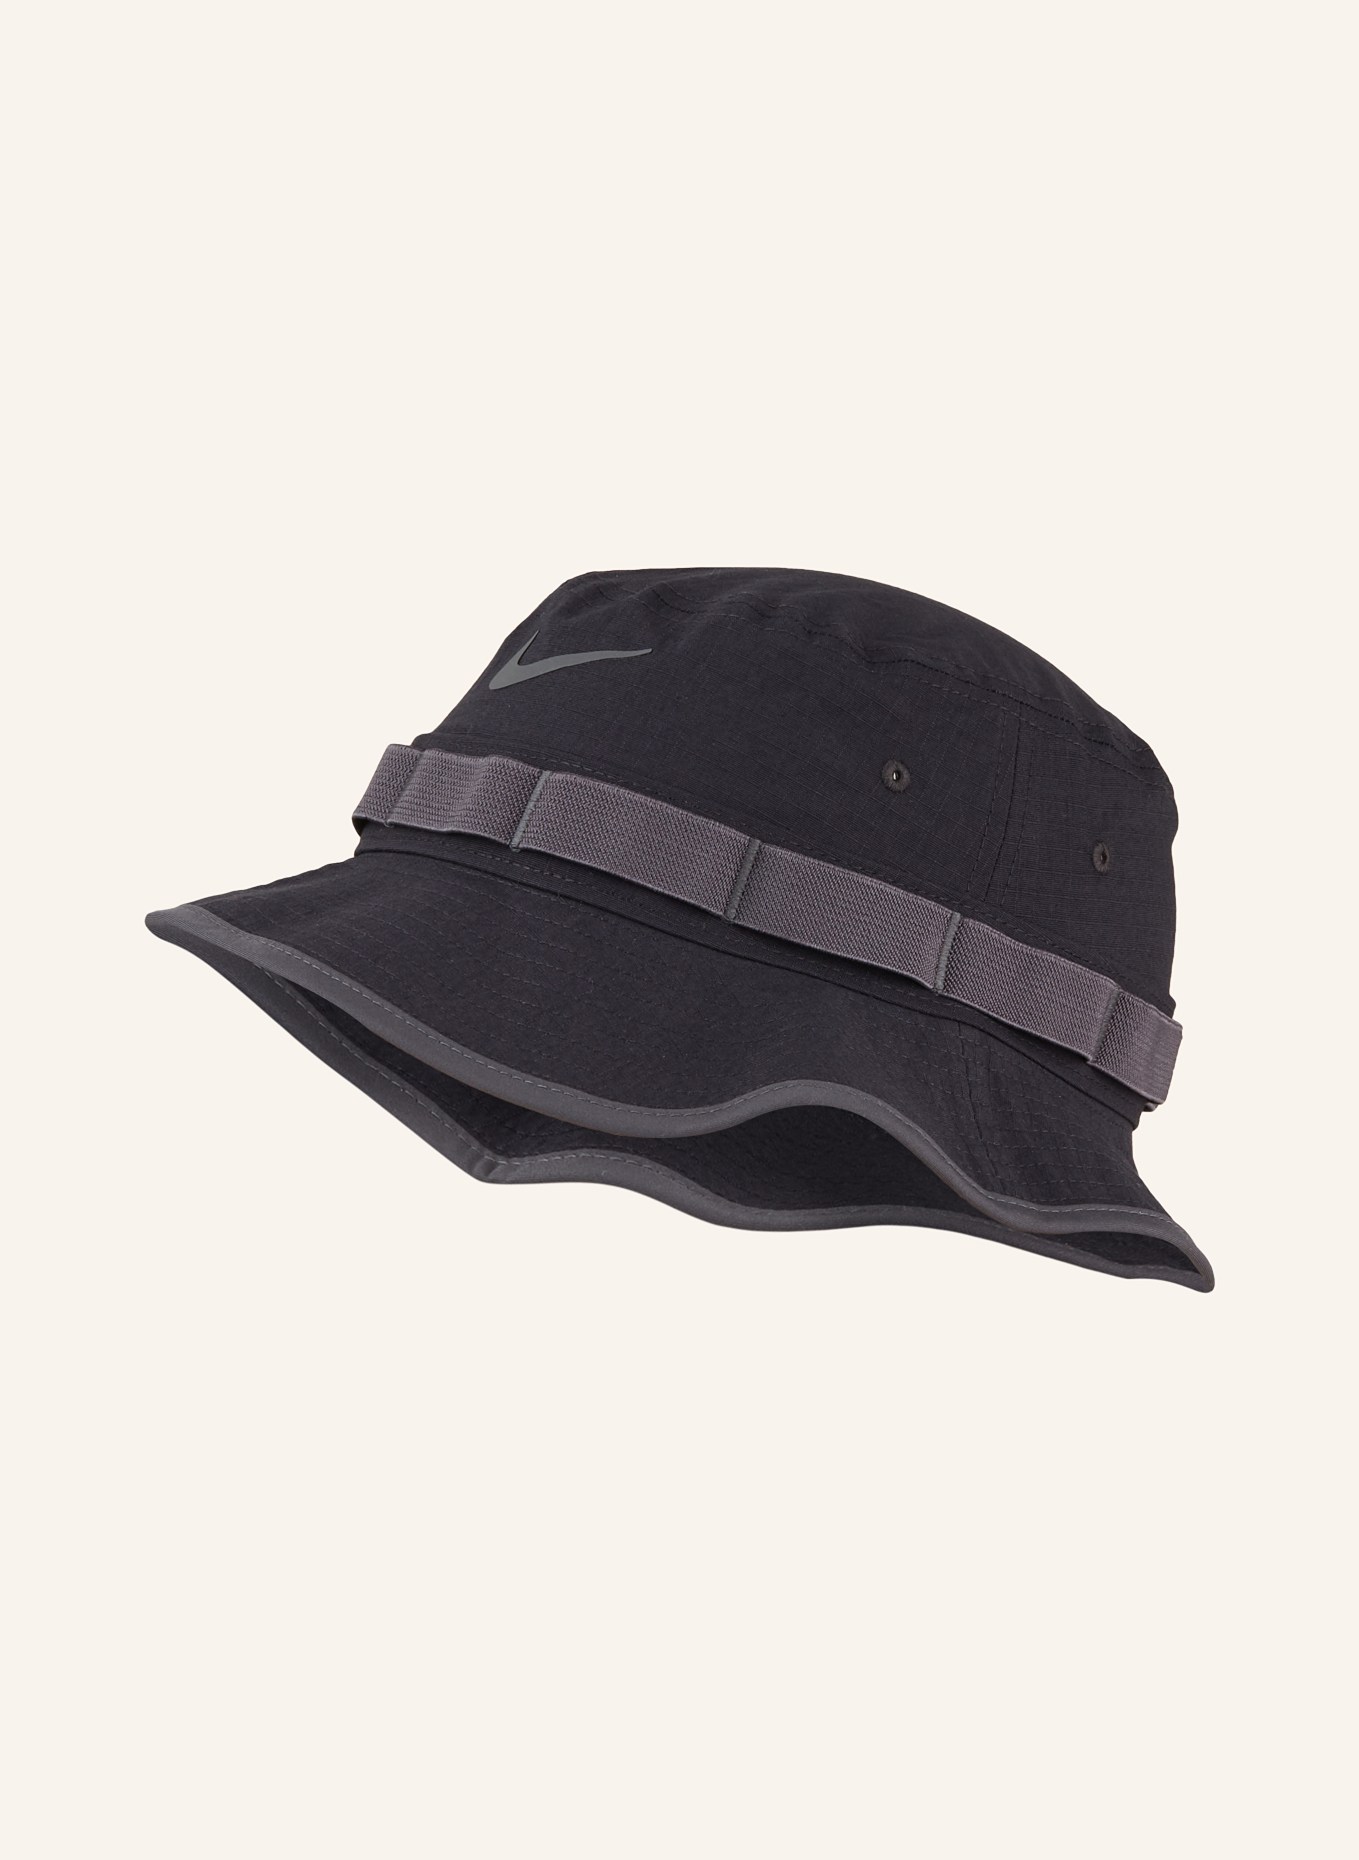 Nike Bucket hat Dri-FIT APEX in black/ dark gray